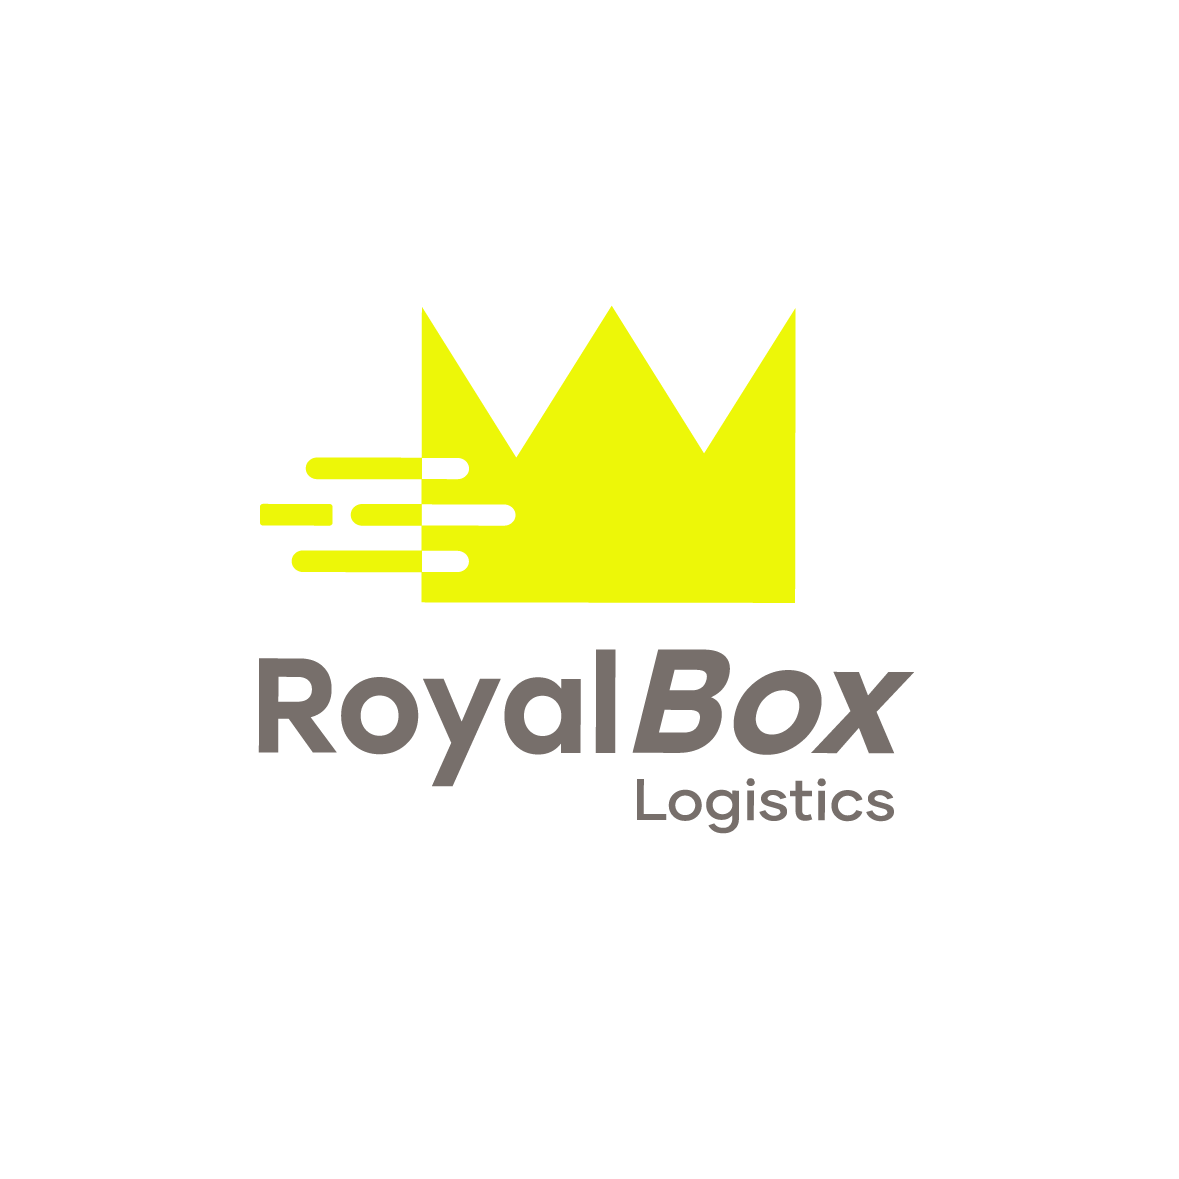 Royal Box Logistics